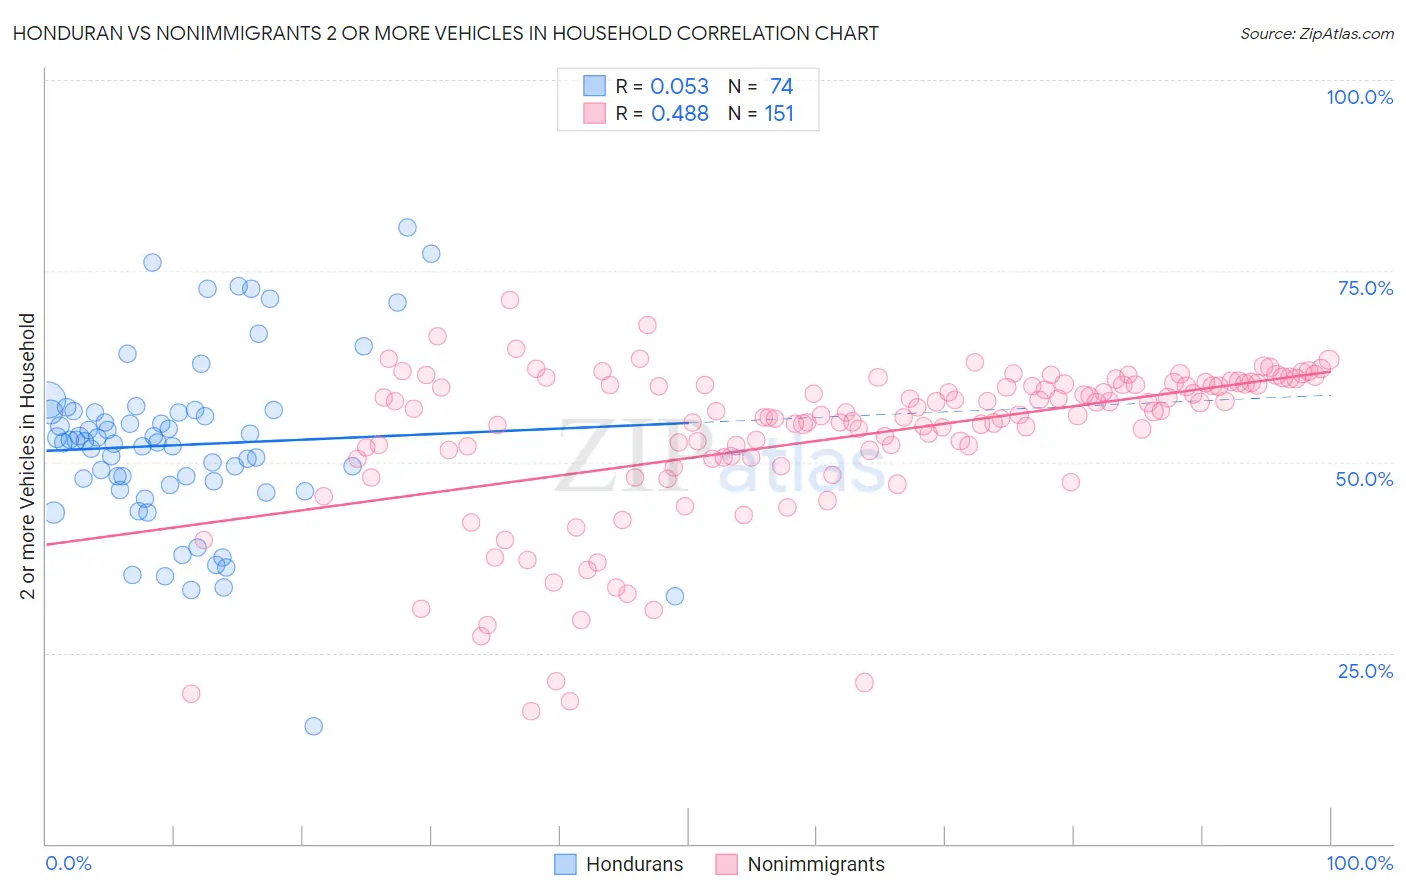 Honduran vs Nonimmigrants 2 or more Vehicles in Household